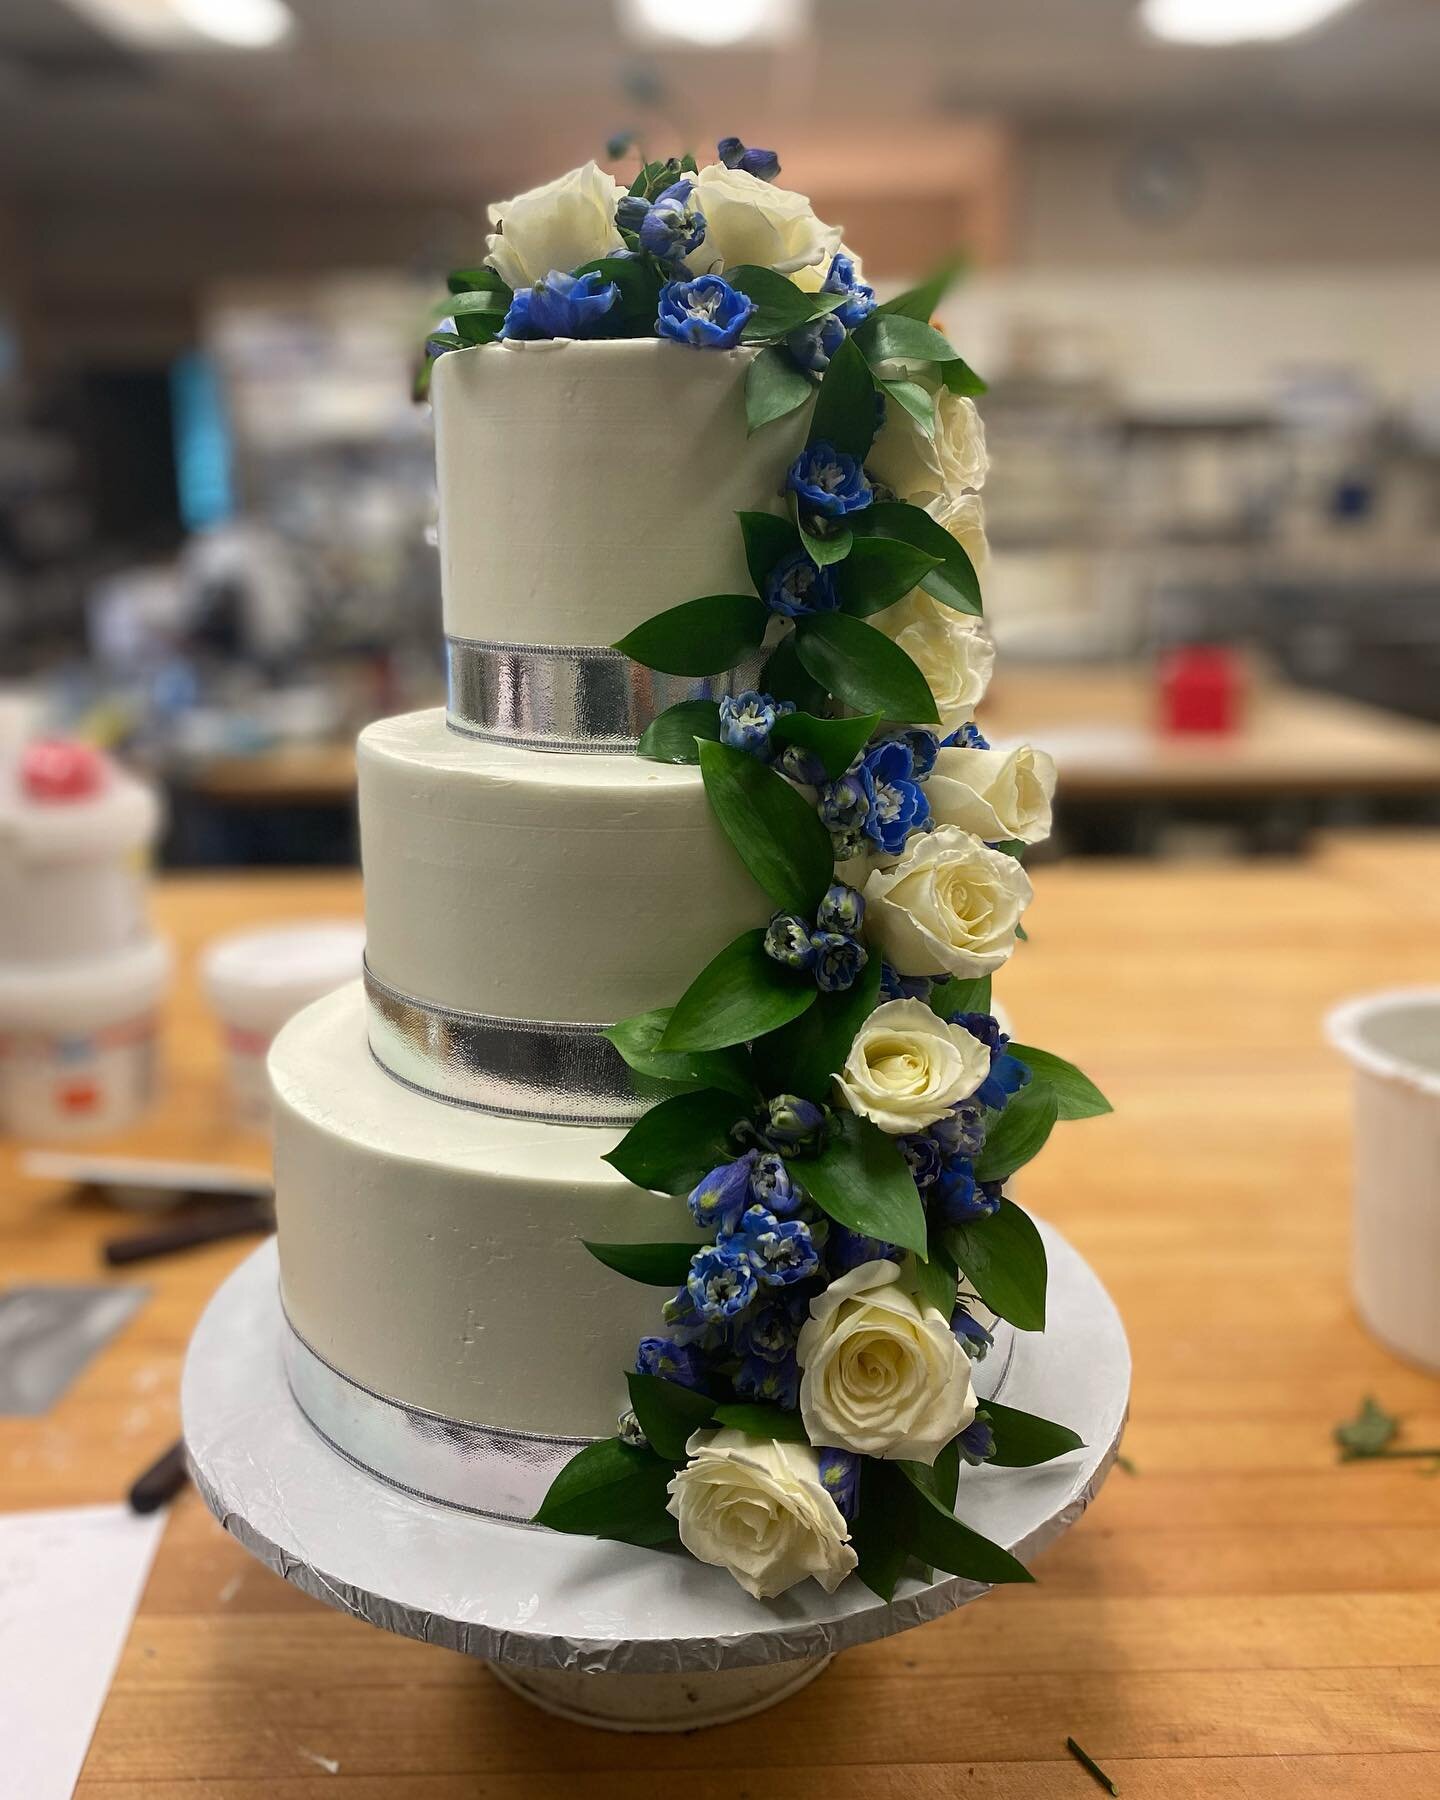 Flowers always complete a wedding cake 🌹🌸🎂
.
.
.
.
.
.
#weddingcake #flowers #njbaker #njbakery #customcakes #cakesofinstagram #bloomfieldnj #cakewithflowers #yum #weddingseason #rudyspastryshop #congratulations